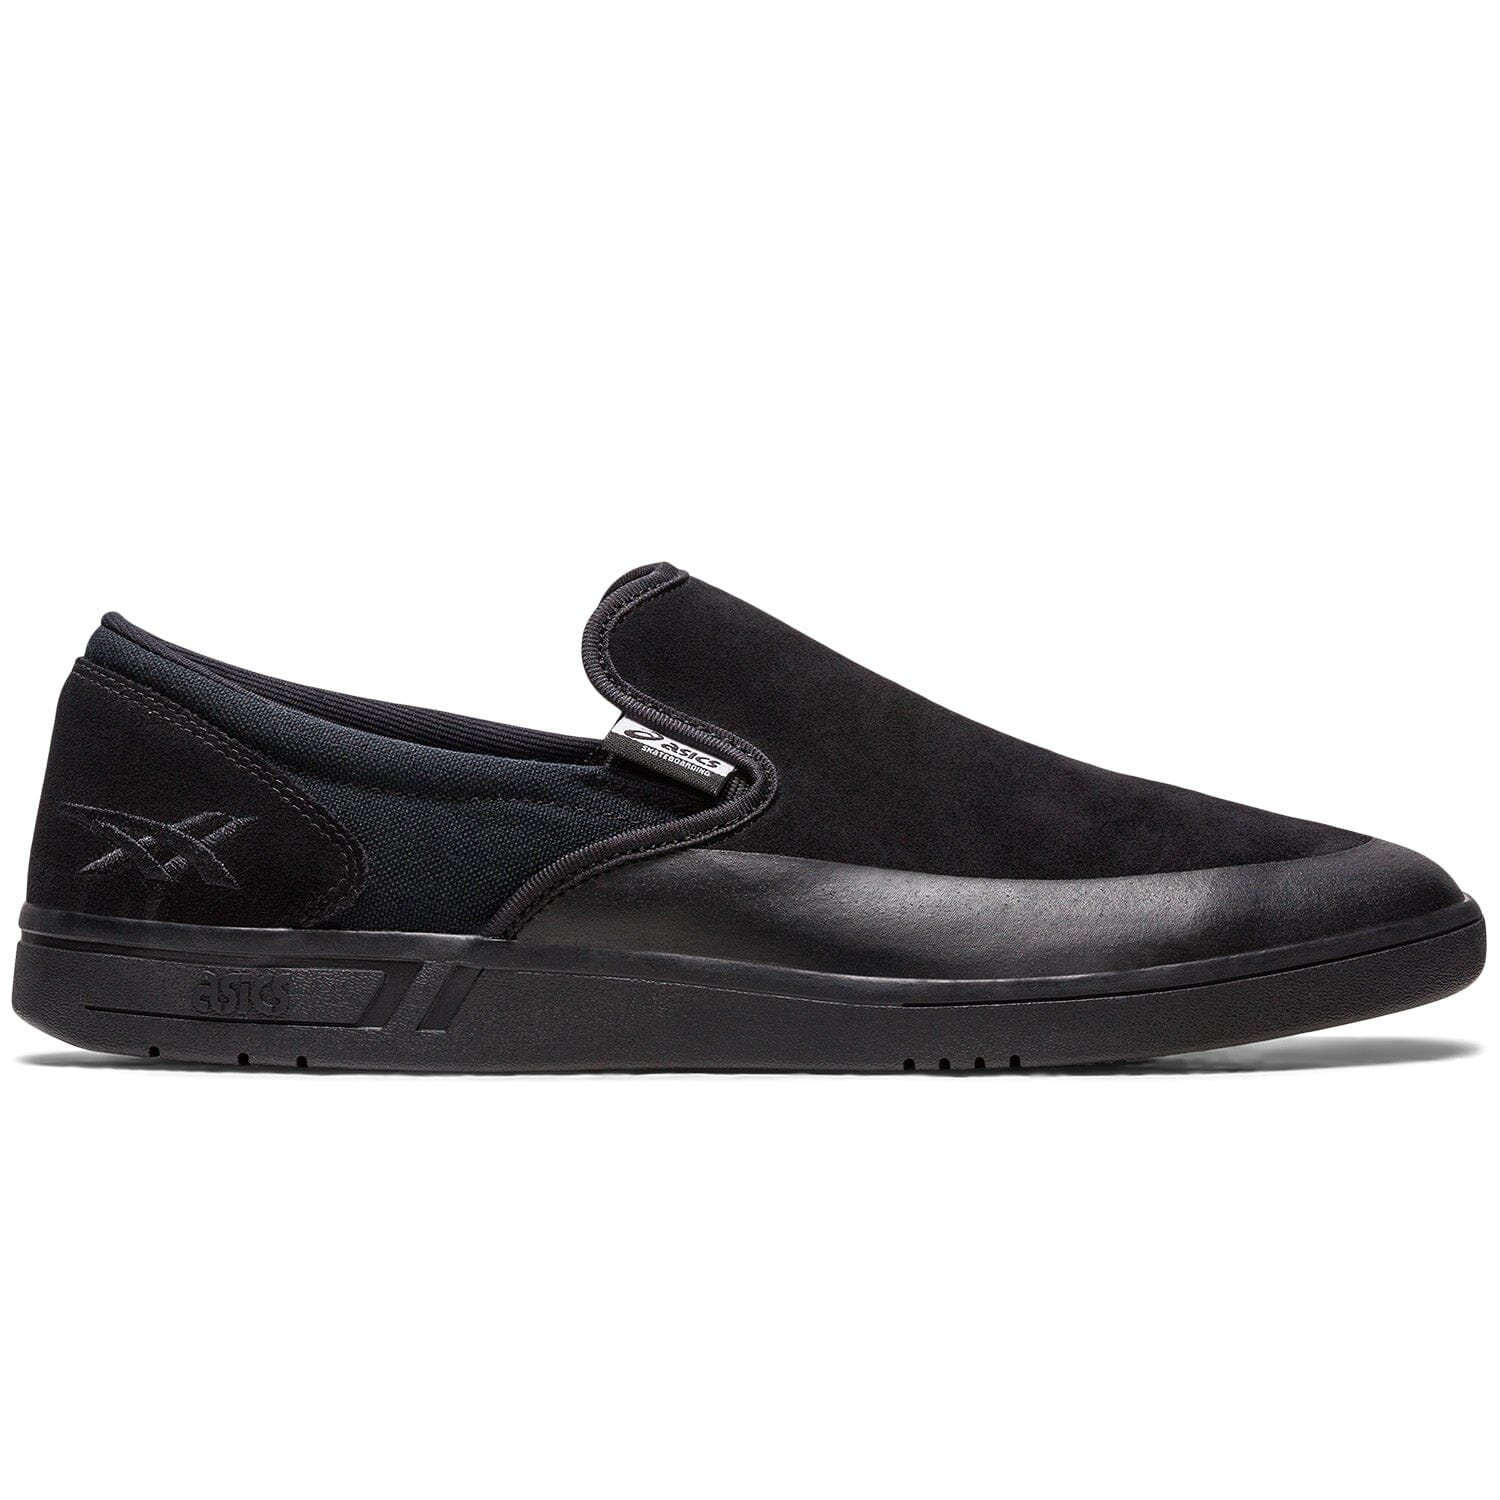 Asics Gel Vickka Slip On Black/Black footwear Asics 